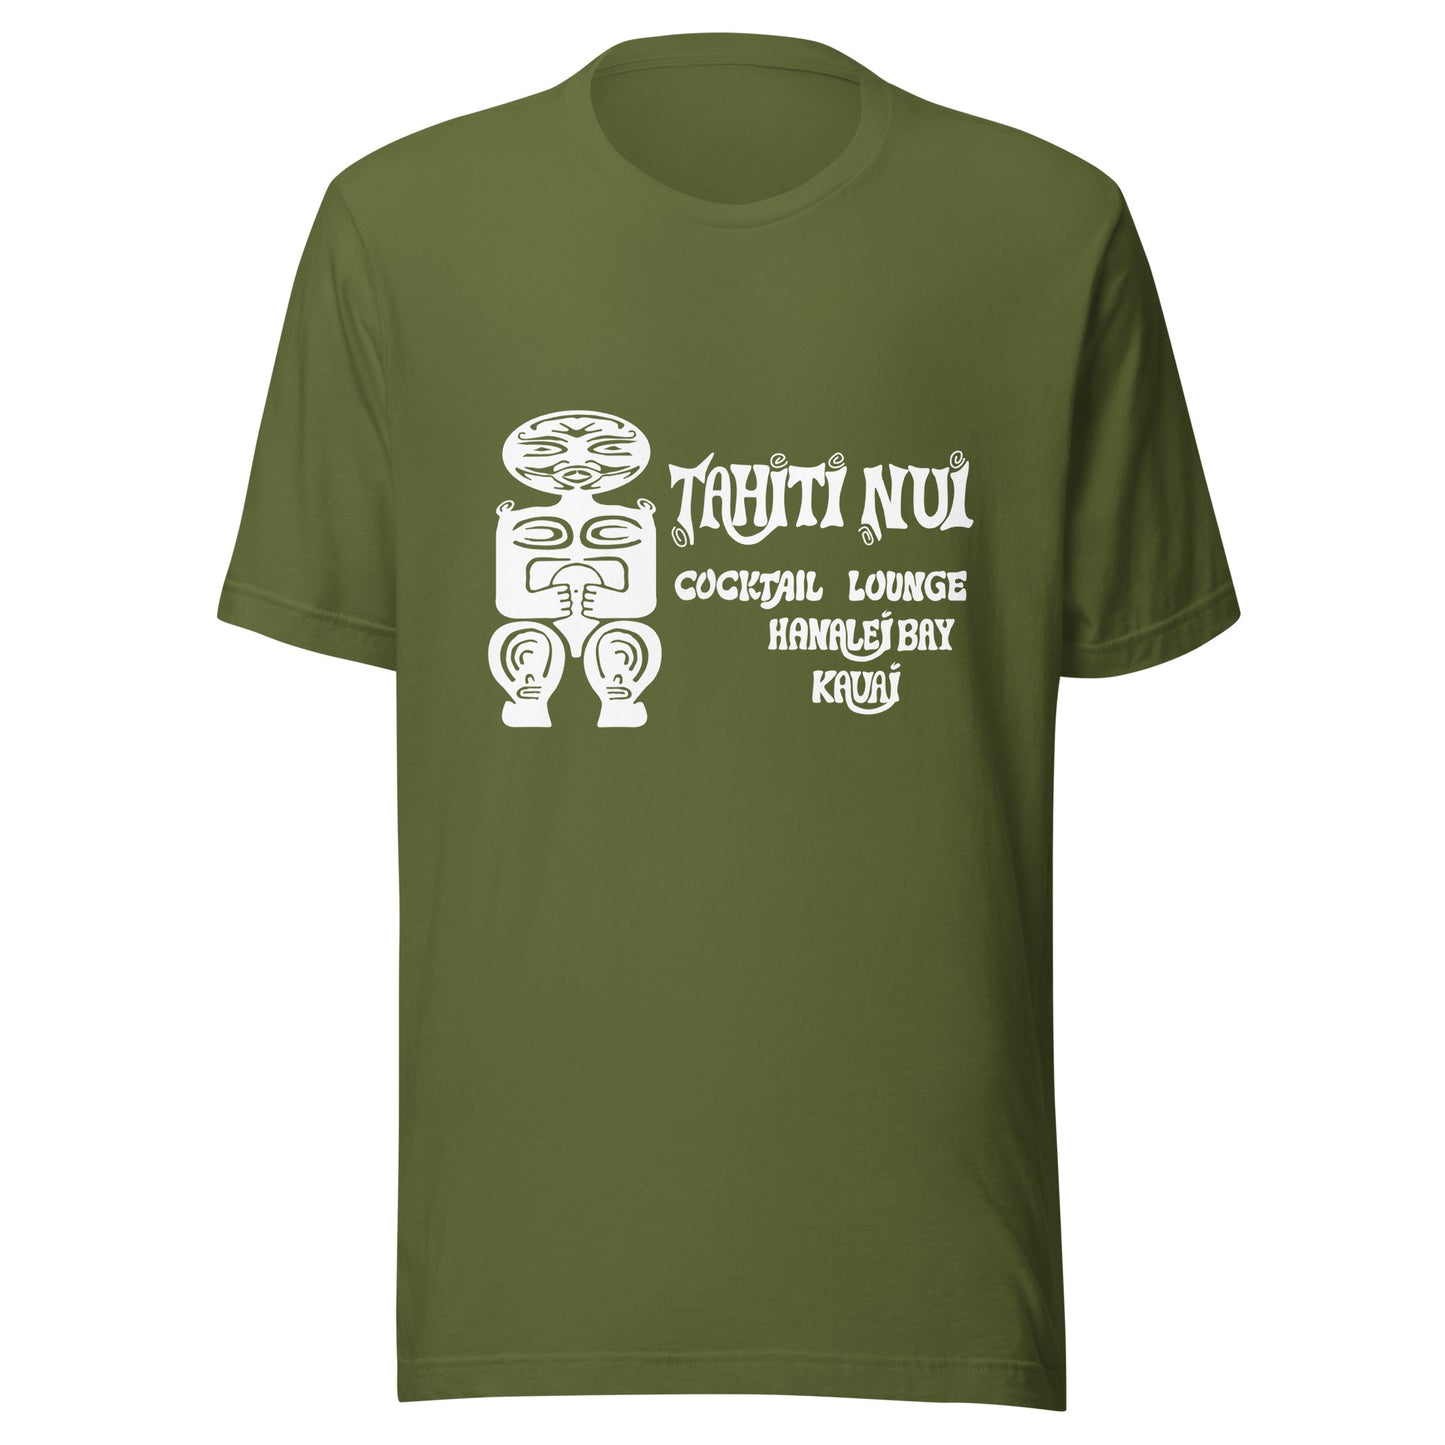 Unisex t-shirt - white Tahiti Nui logo